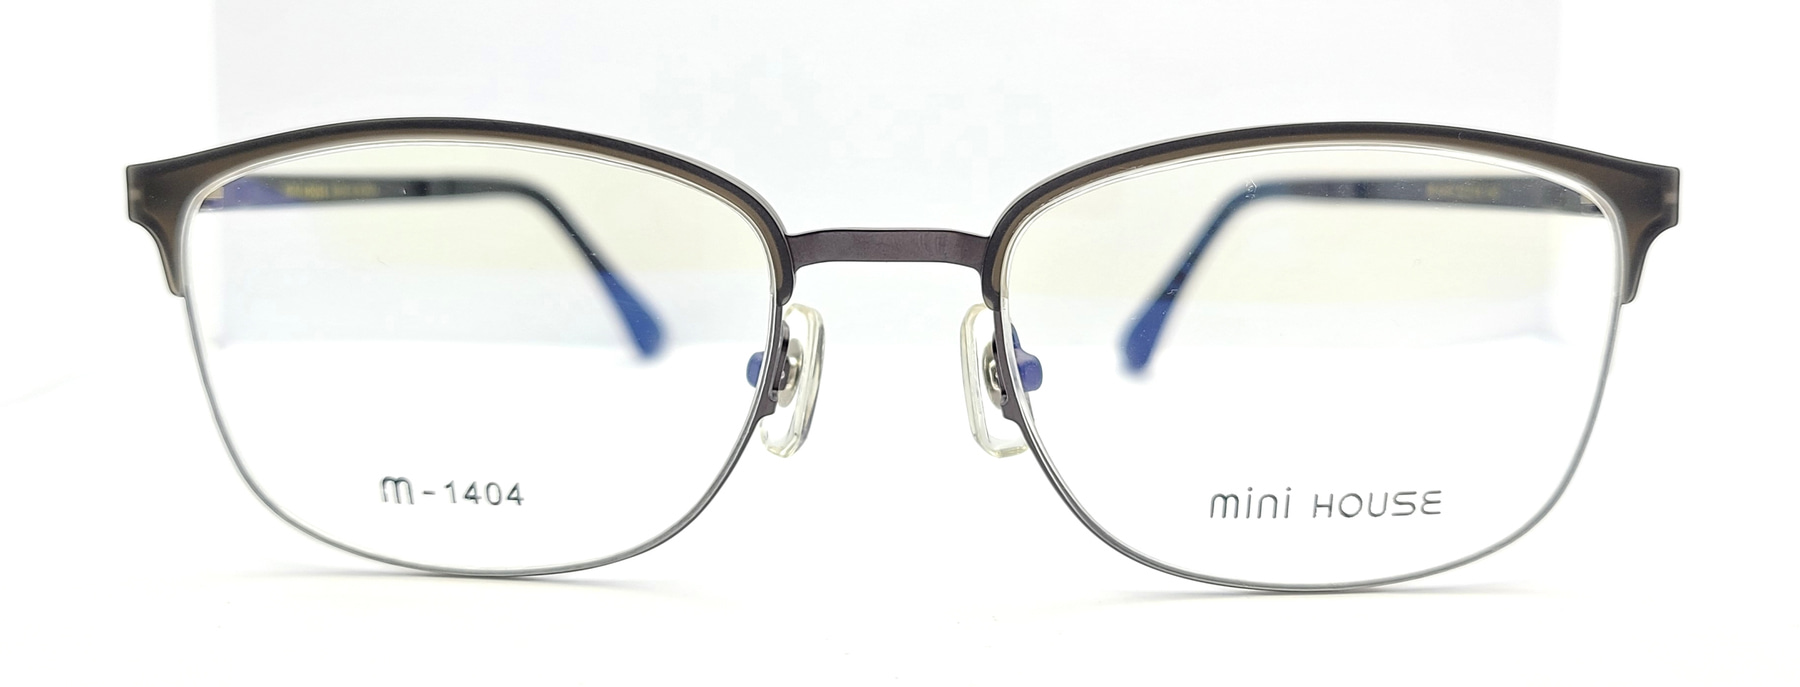 MINIHOUSE M-1404, Korean glasses, sunglasses, eyeglasses, glasses